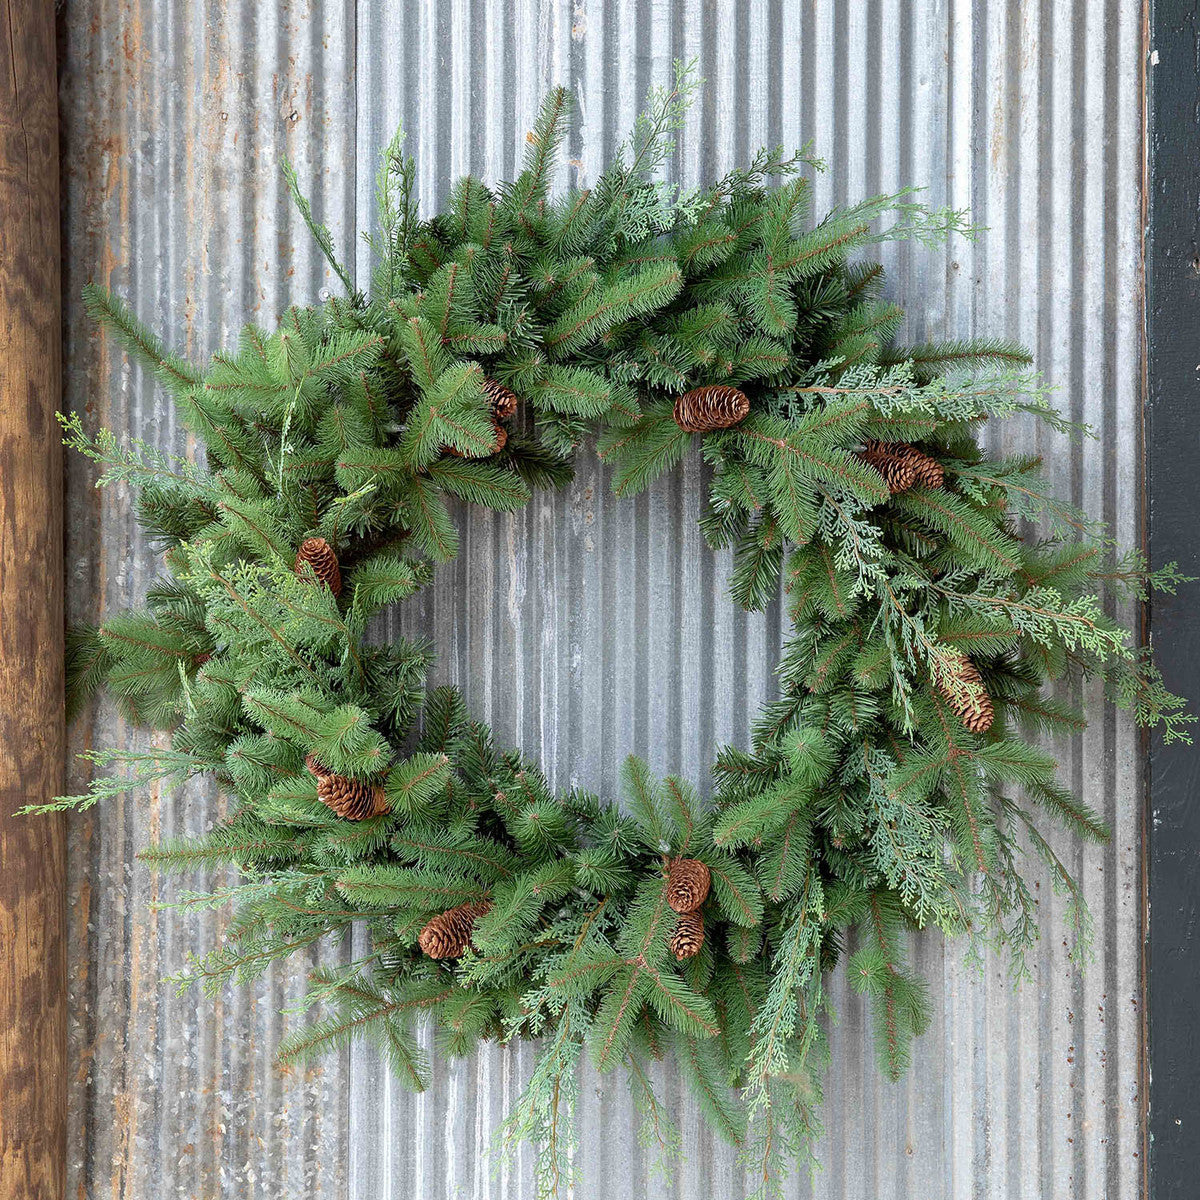 Winter Evergreen Wreath - 39"